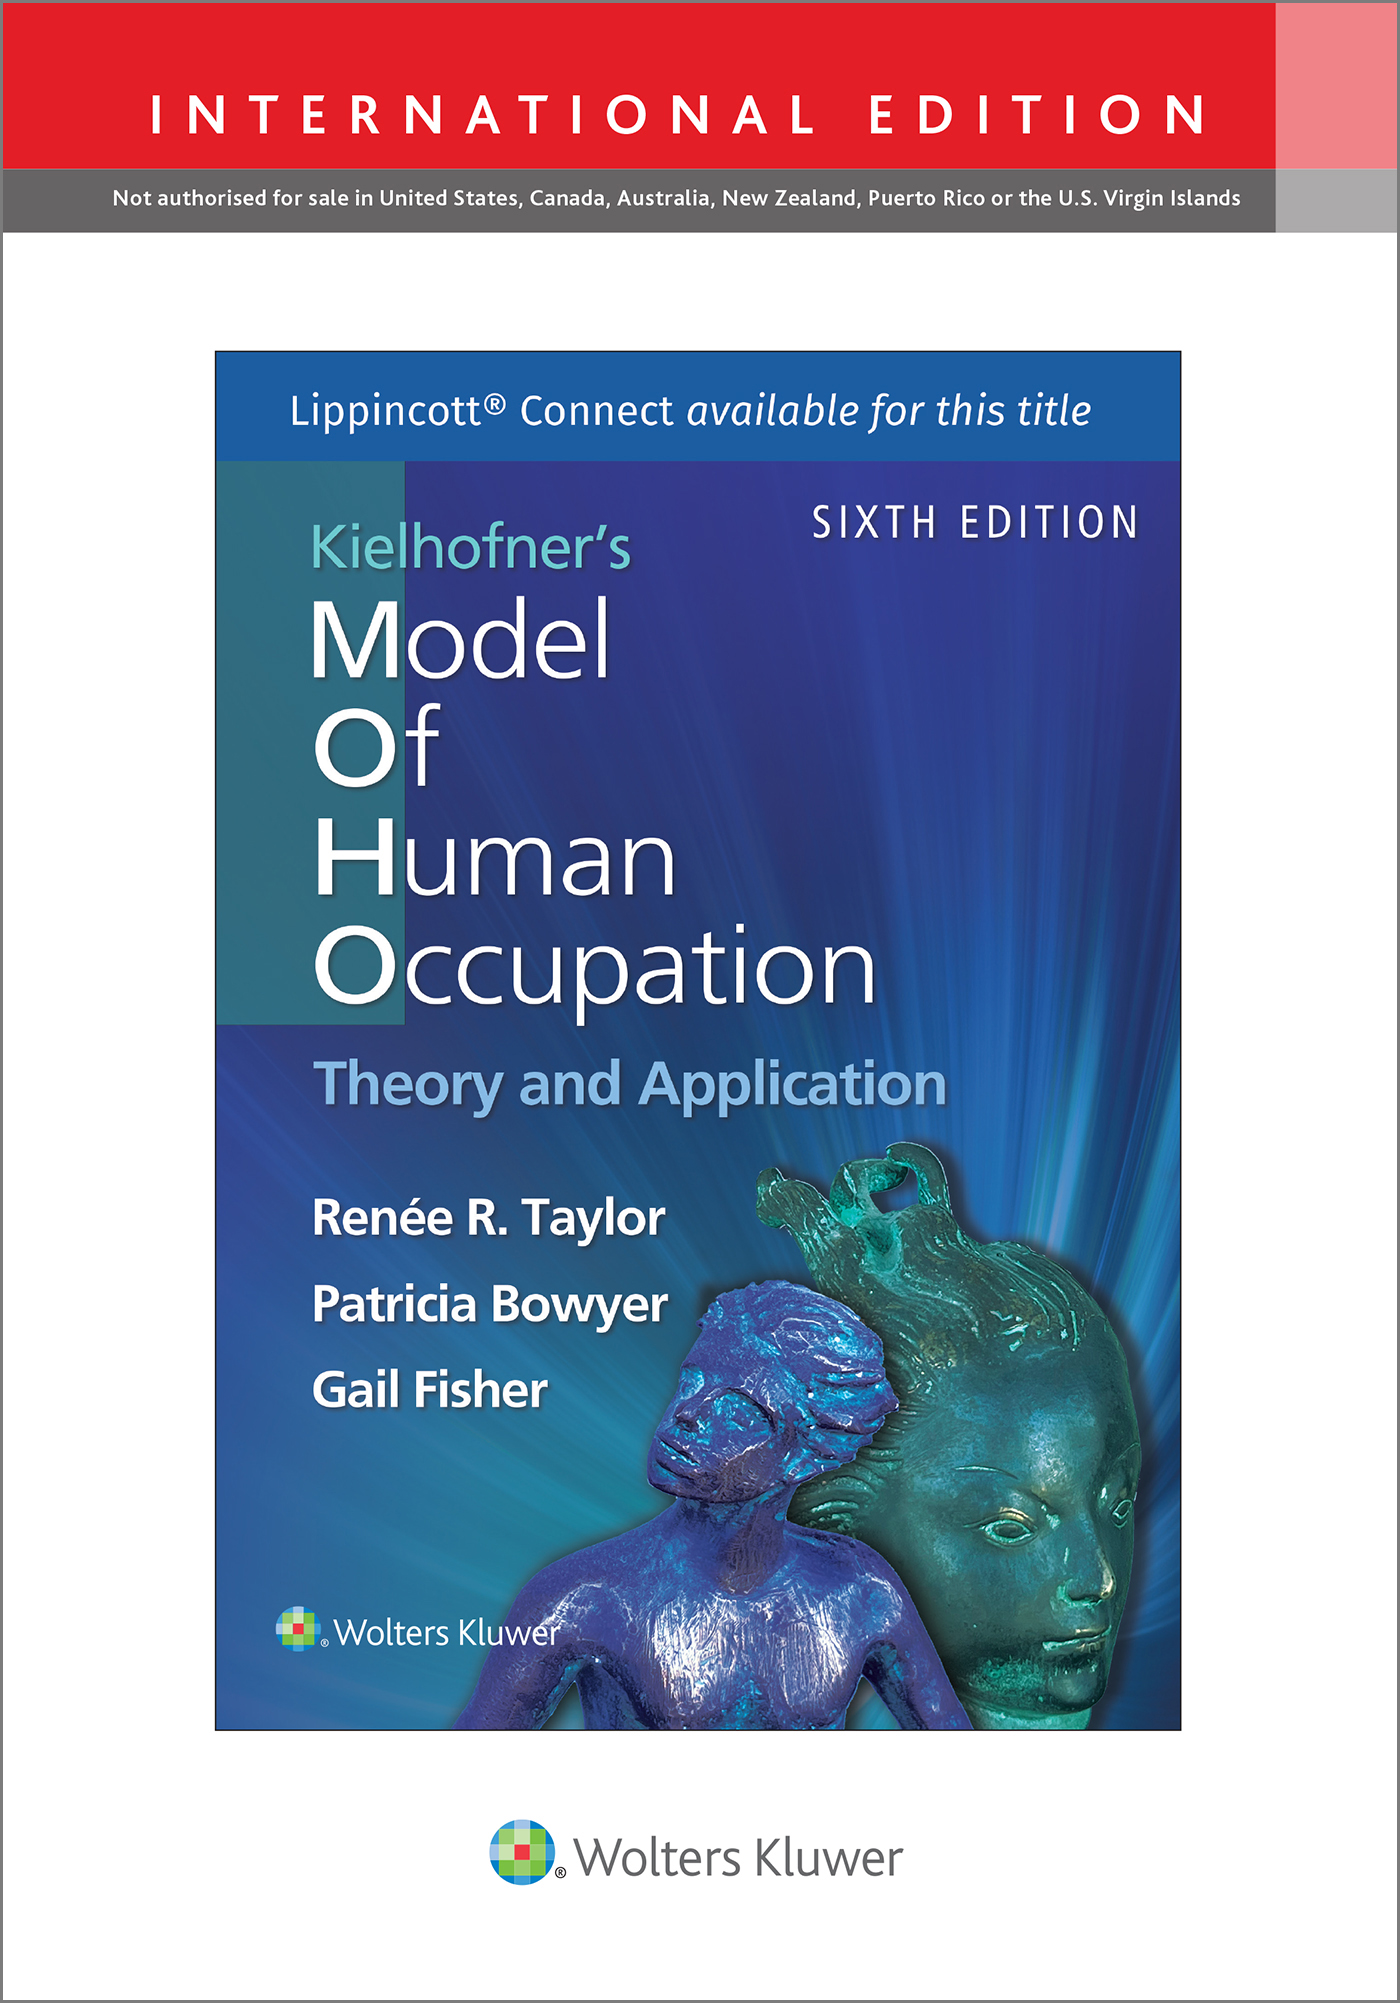 Kielhofner's Model of Human Occupation, 6th ed.(Int'l ed.)- Theory & Application